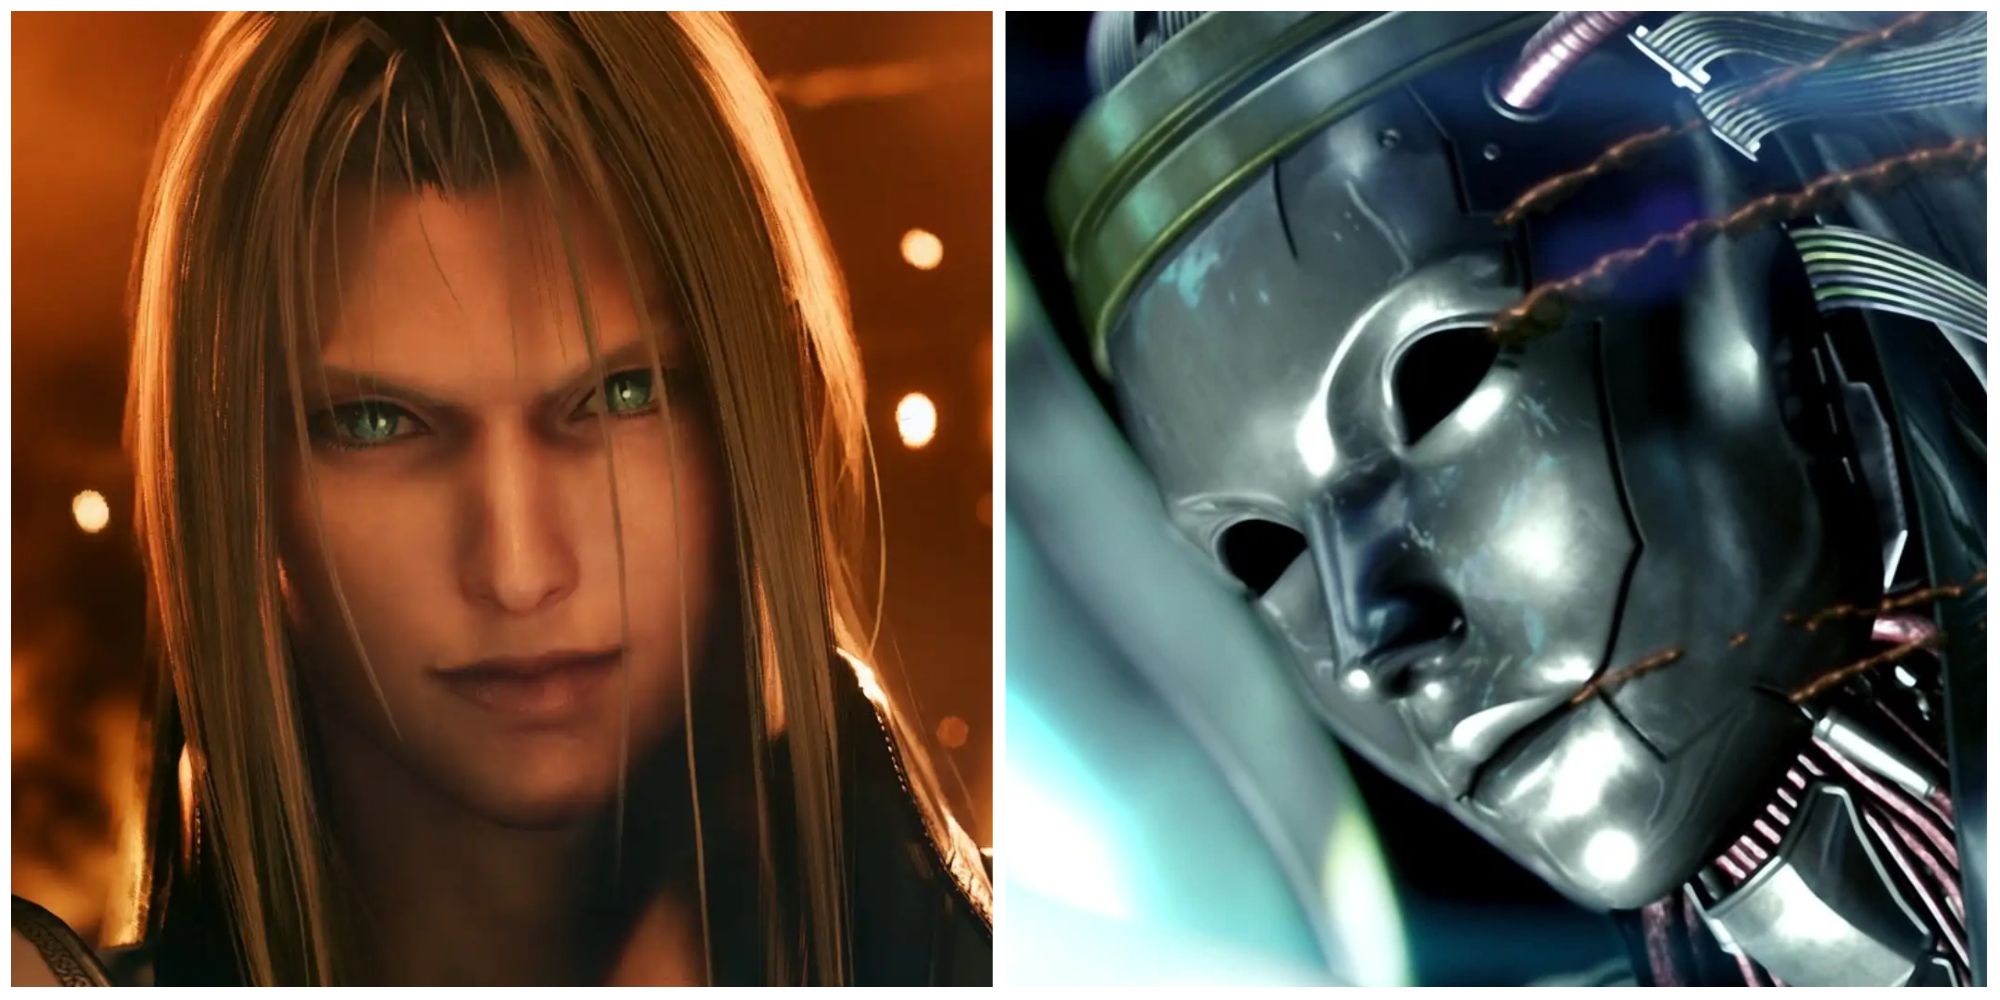 Sephiroth and Jenova in Final Fantasy 7 Remake